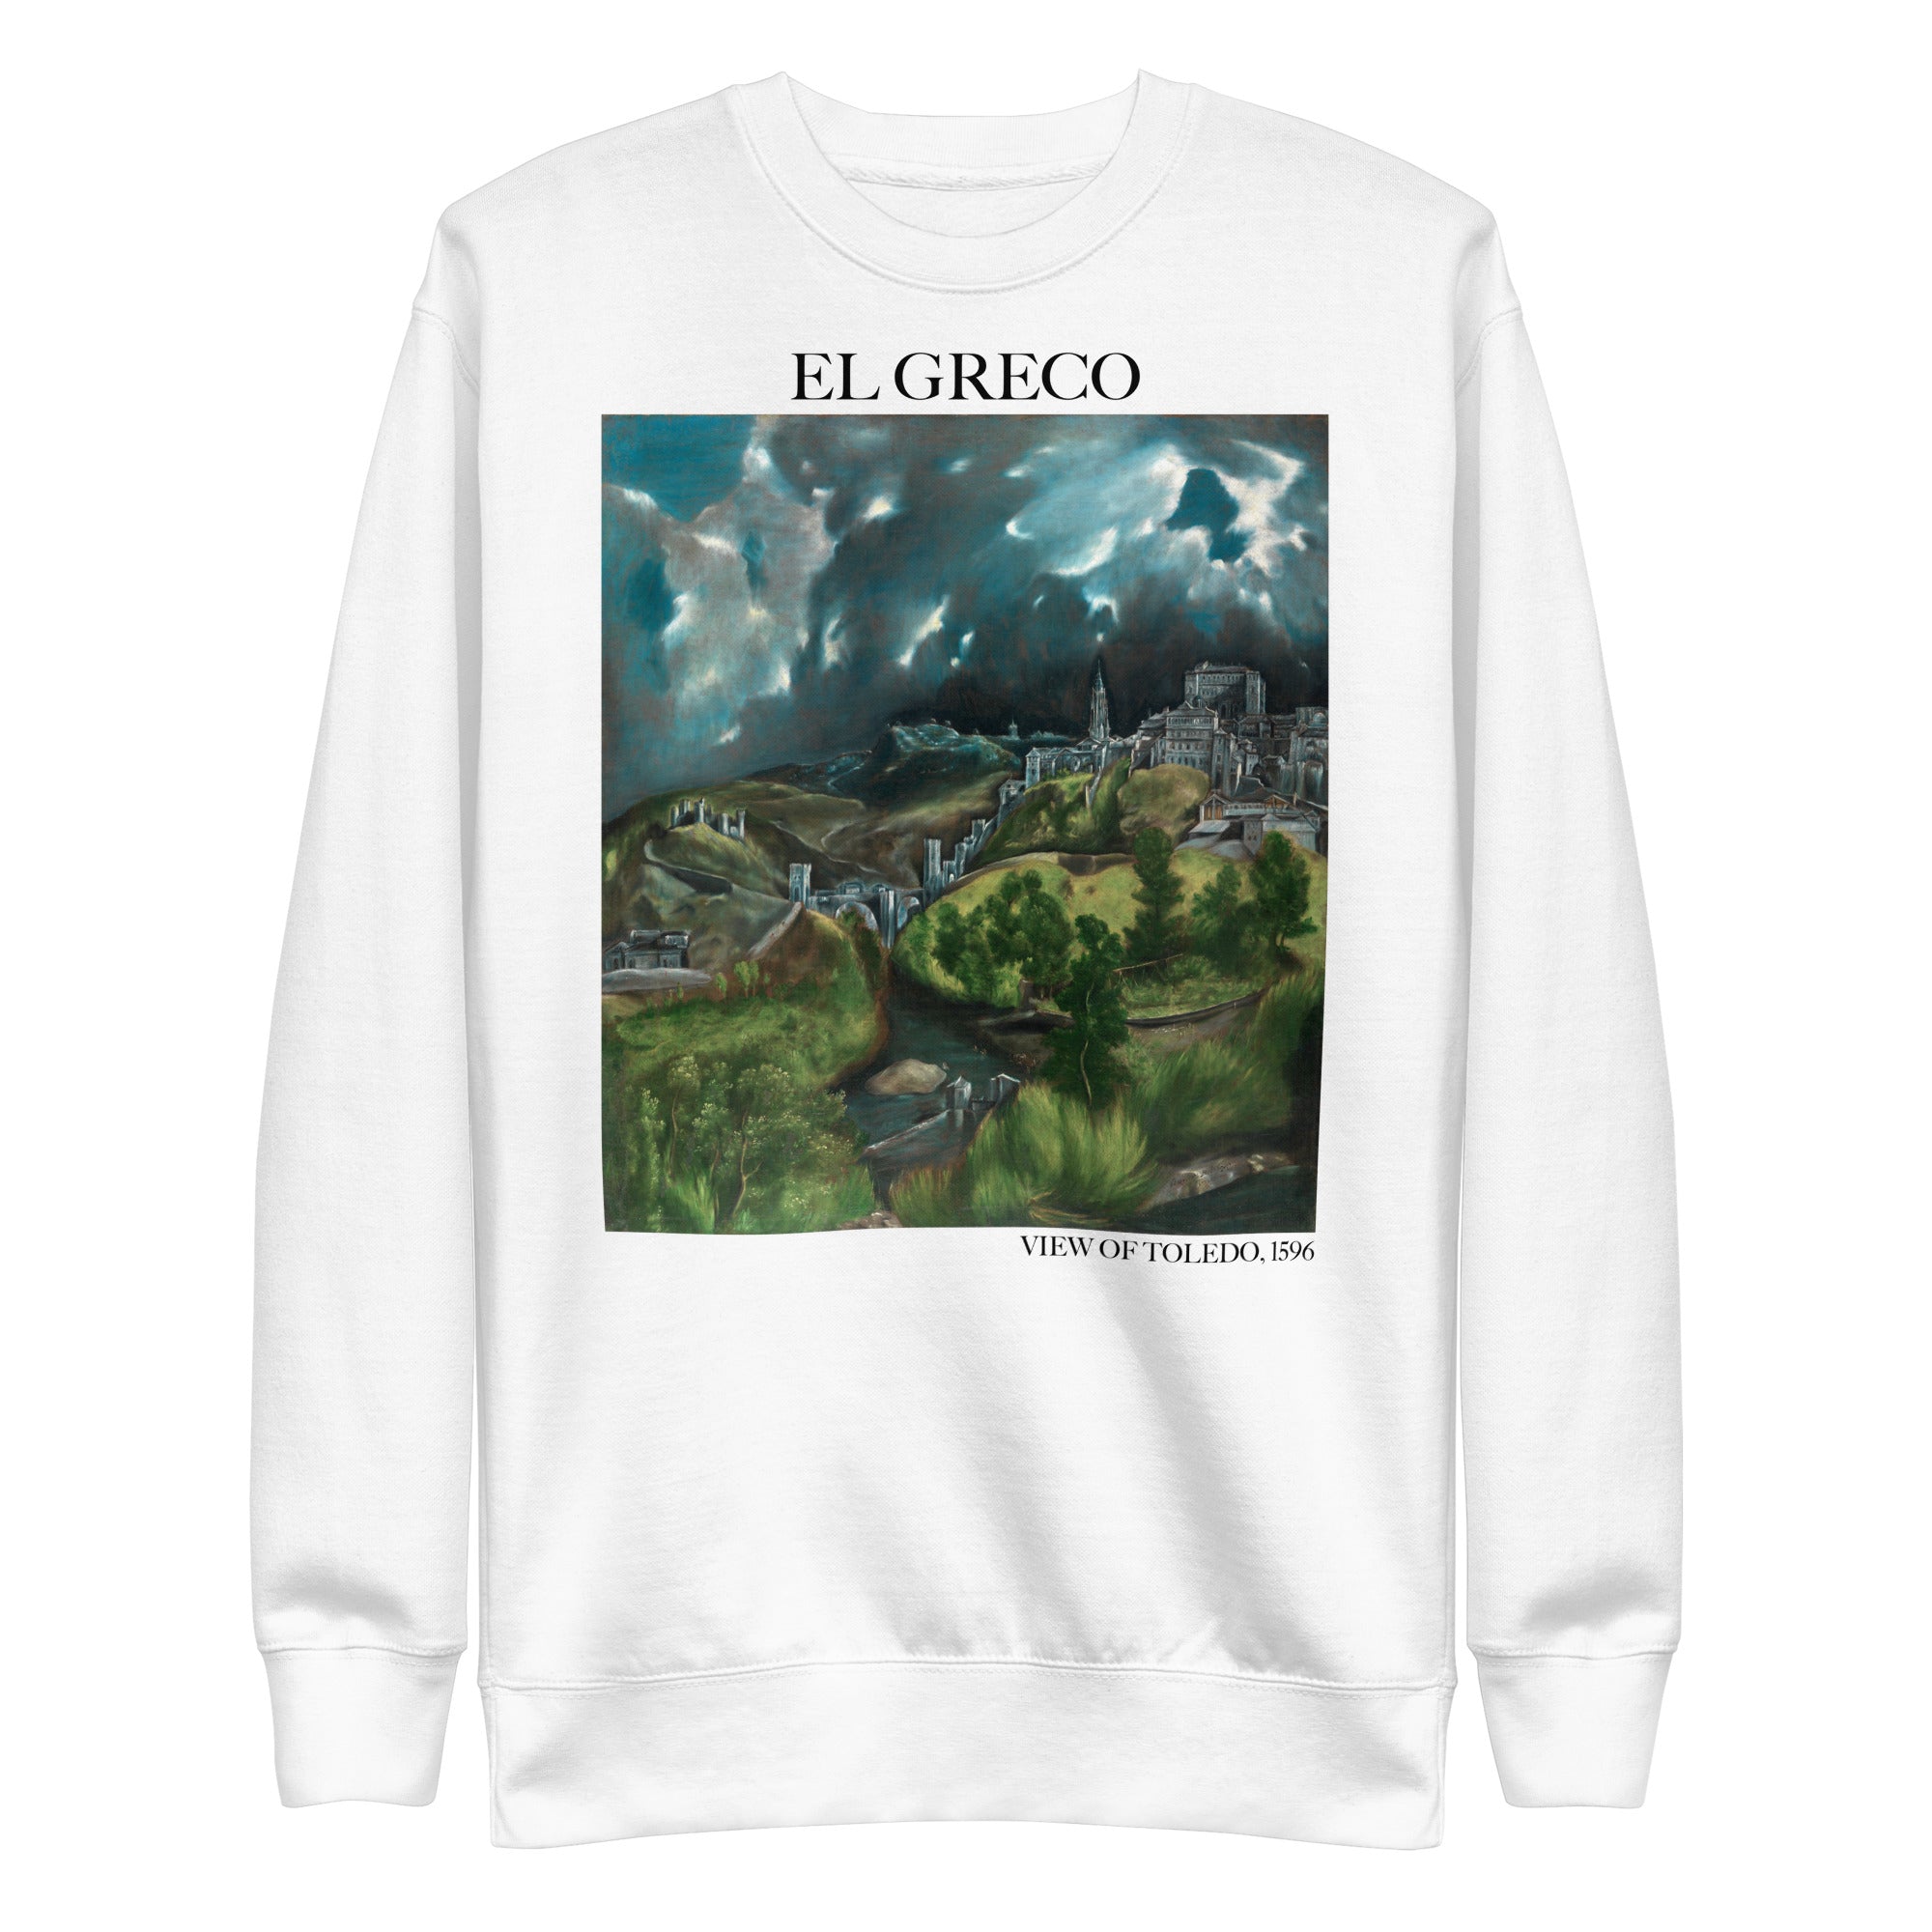 El Greco 'View of Toledo' Famous Painting Sweatshirt | Unisex Premium Sweatshirt